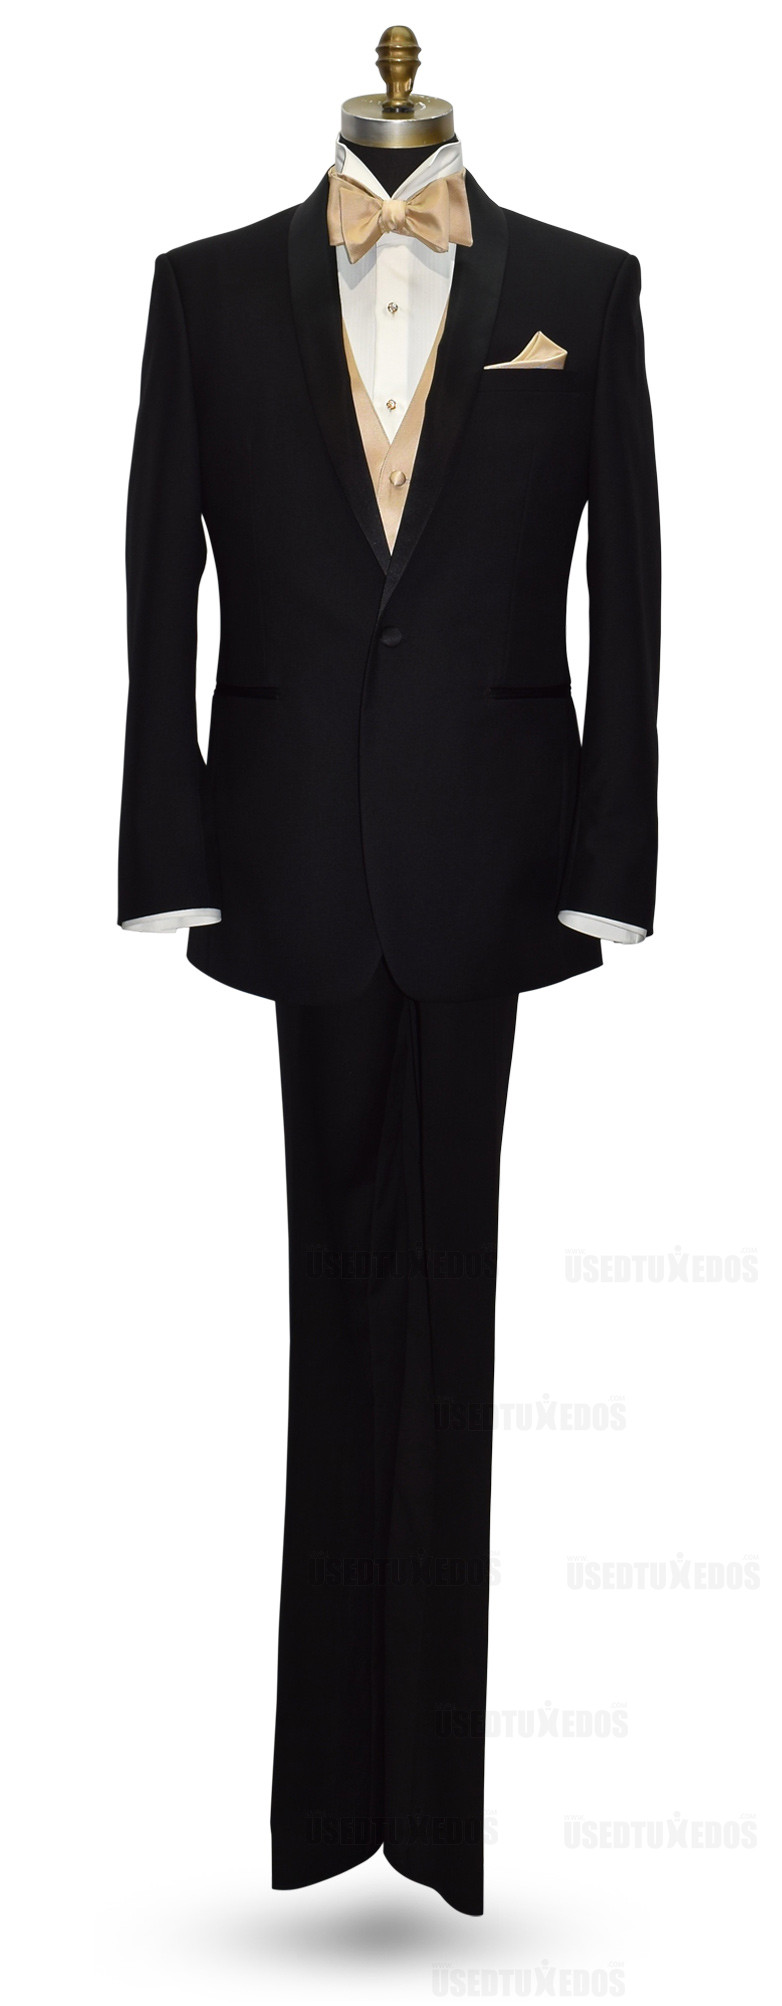 black tuxedo with golden vest and golden self-tie bowtie by San Miguel Formals